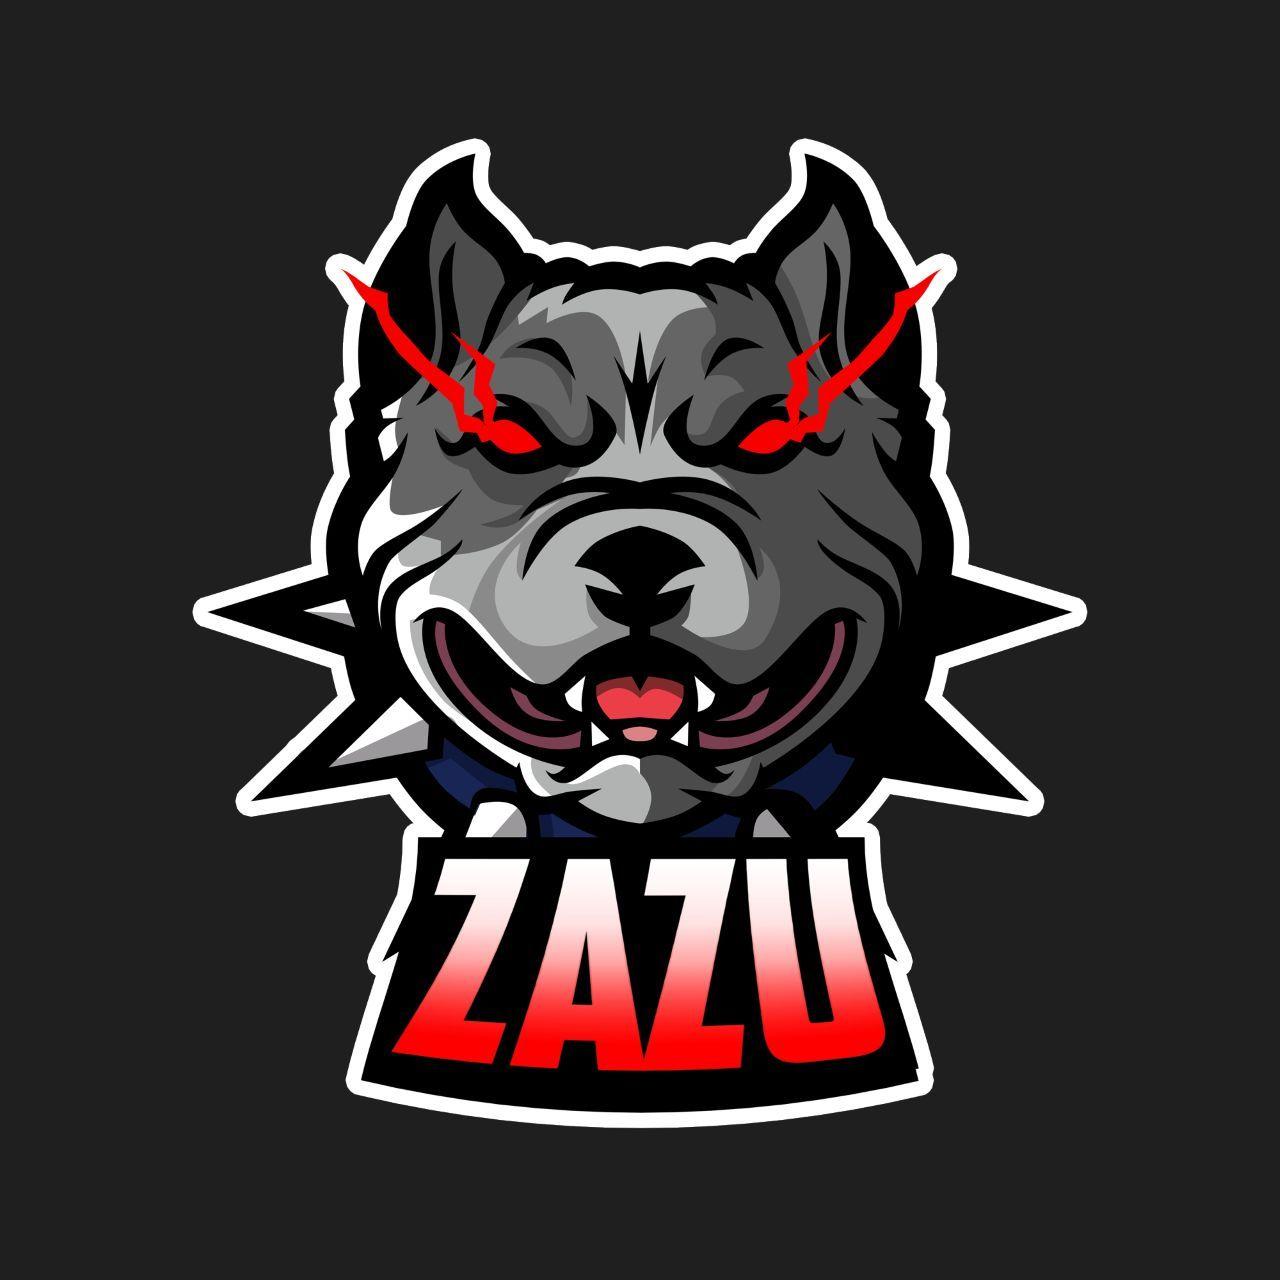 Player Zazueta avatar